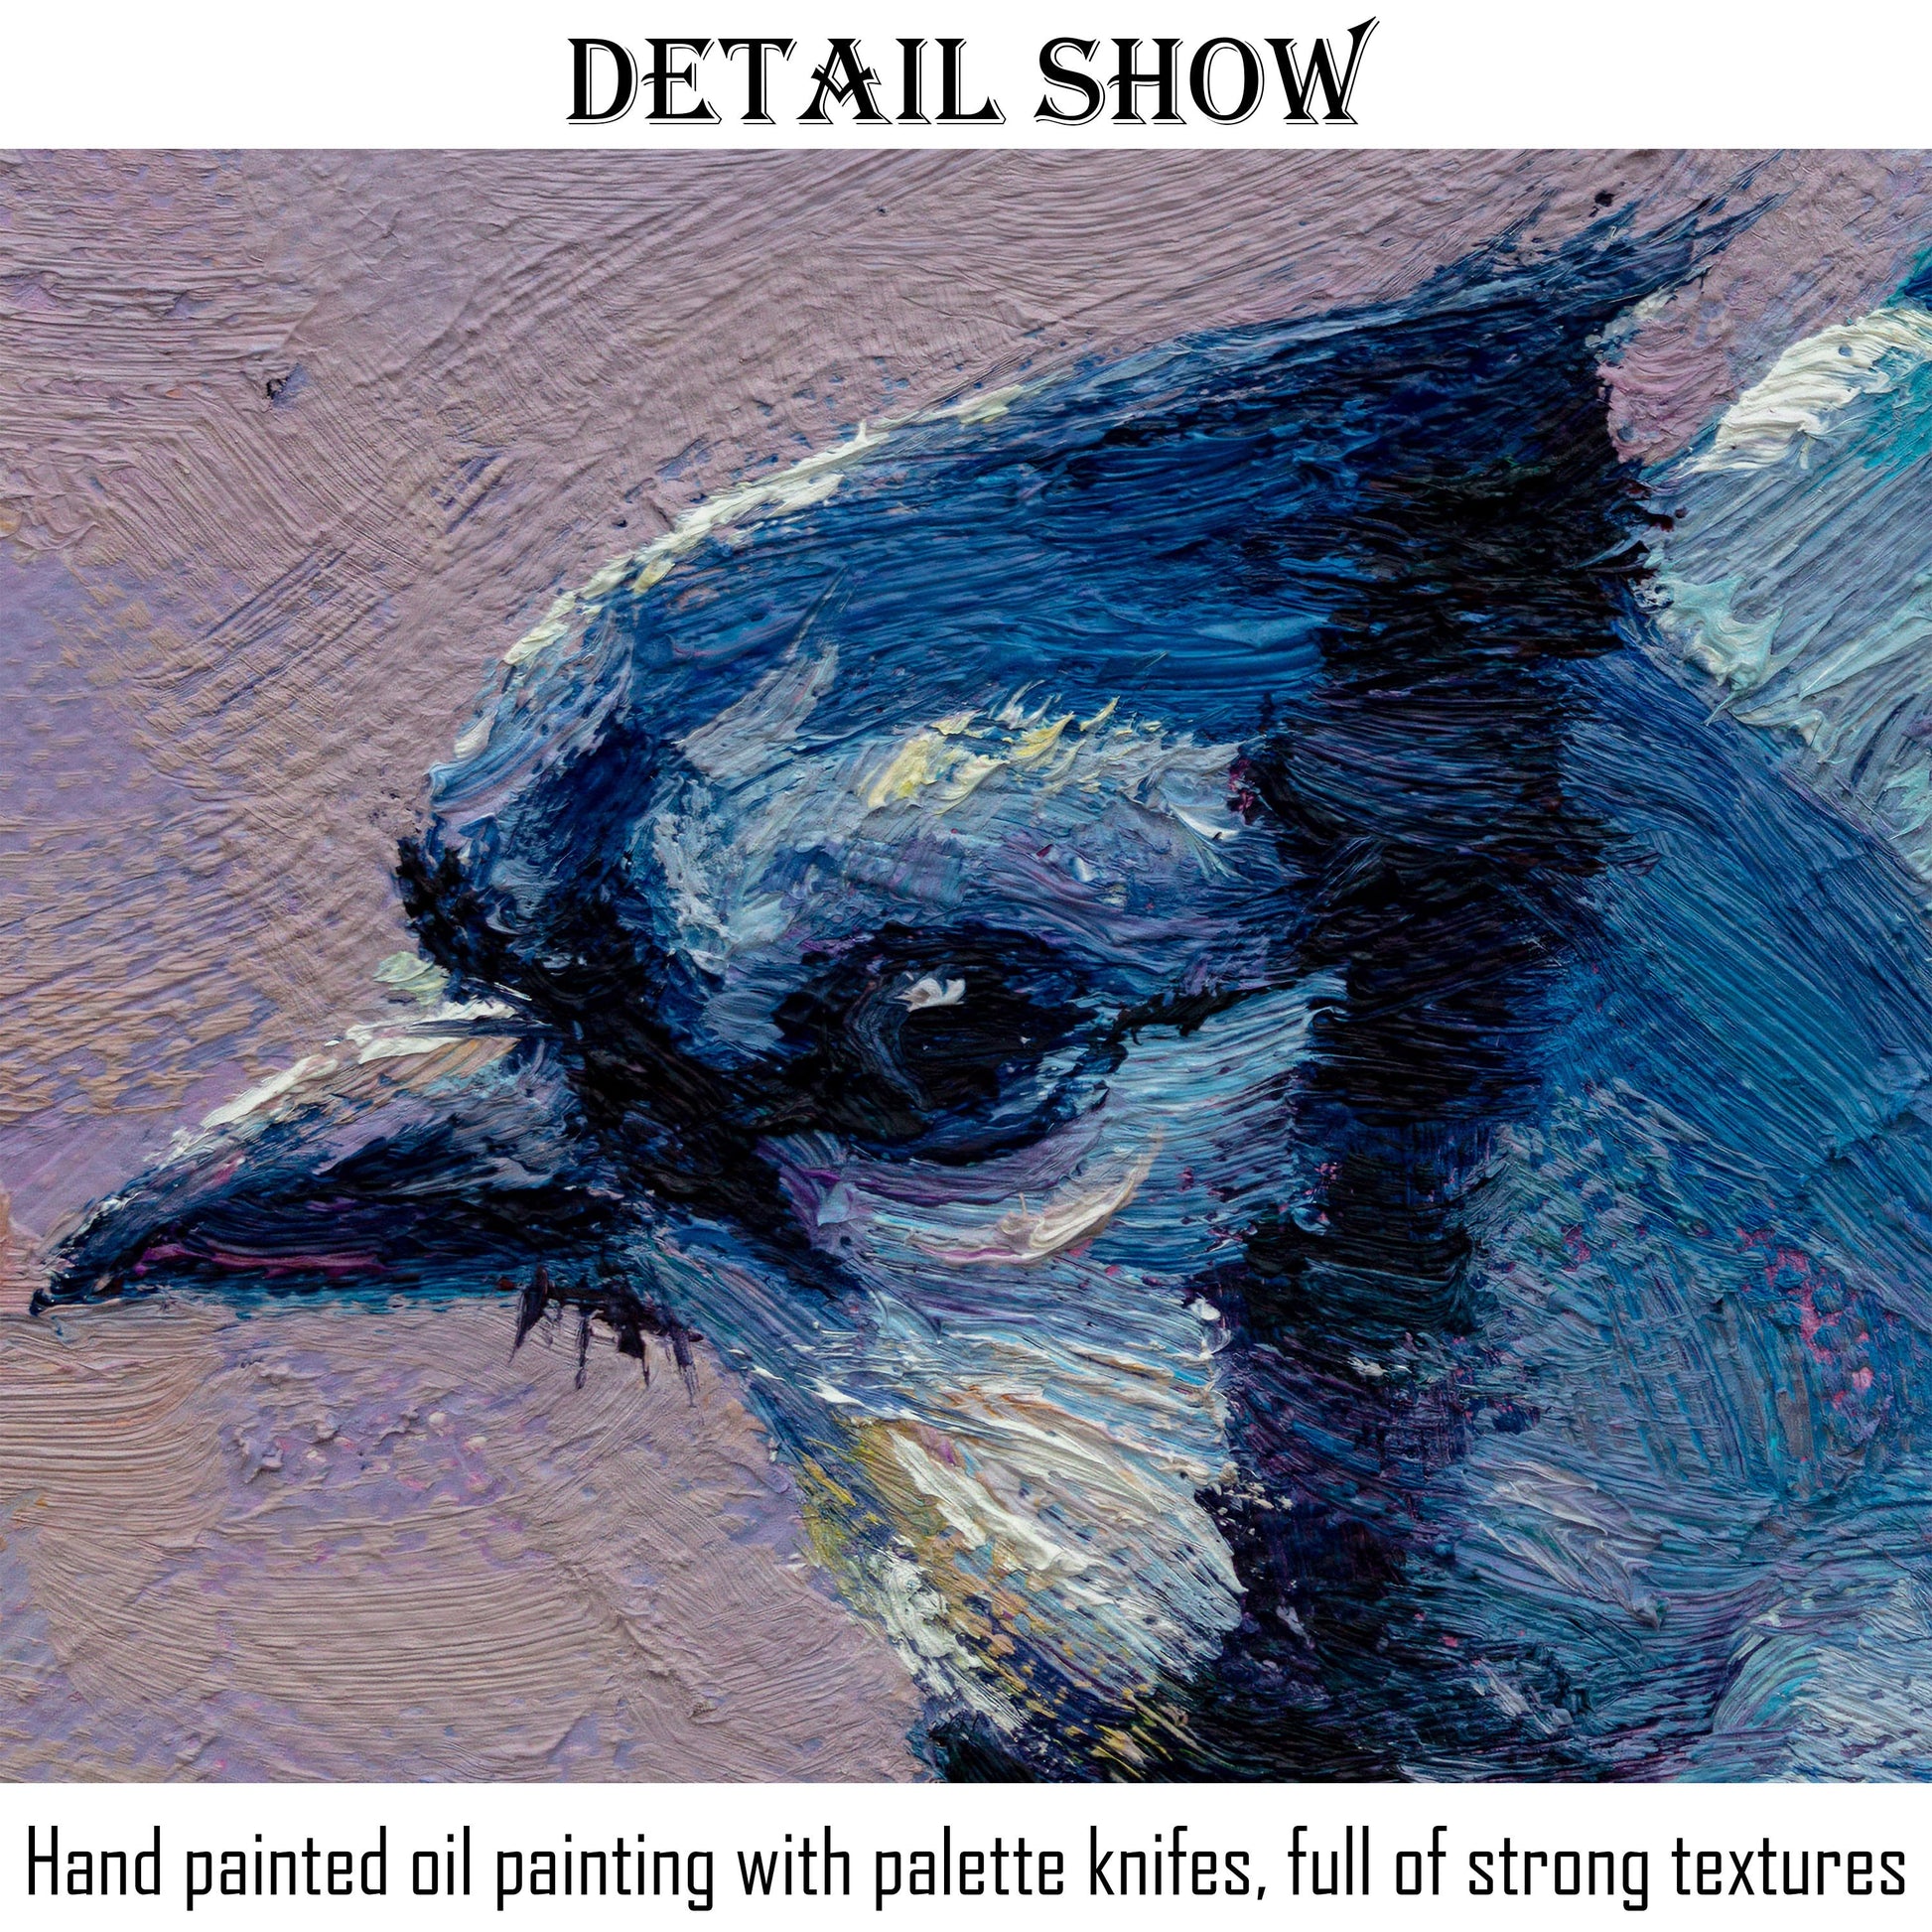 Small Oil Painting Blue Jay Bird, Rustic Living Room Decor, Canvas Wall Art, Original Oil Painting, Bird Decor, Canvas Art, Modern Painting